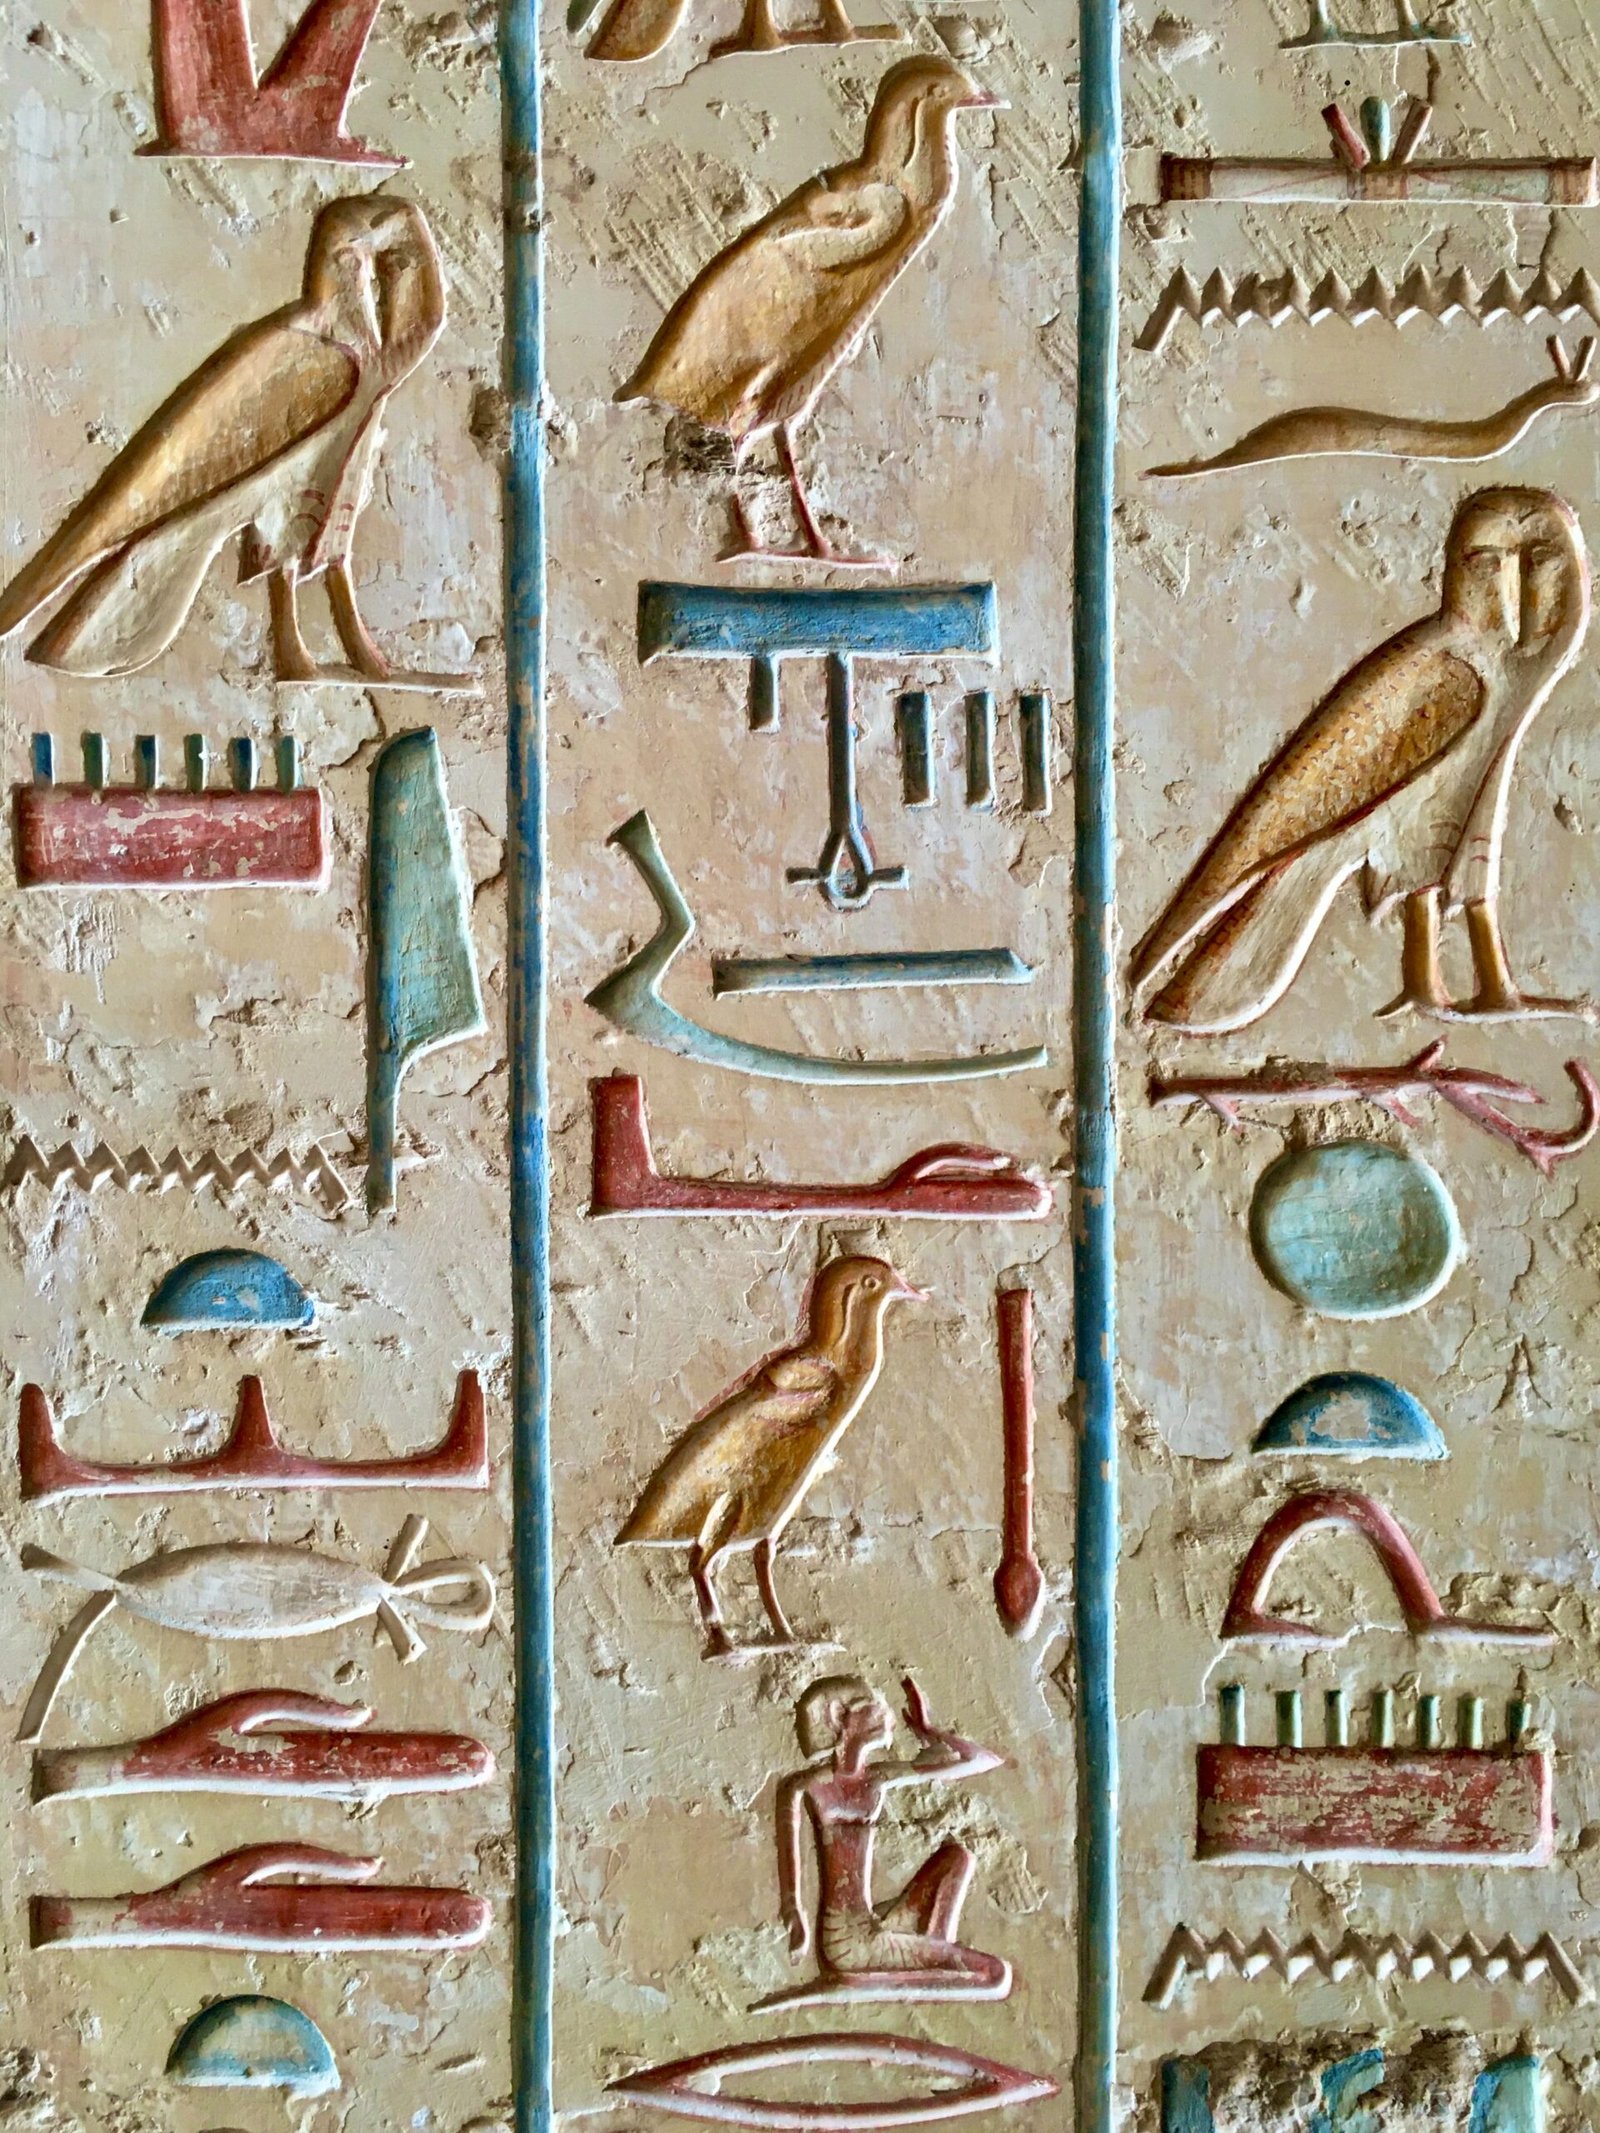 Hieroglyphs symbols